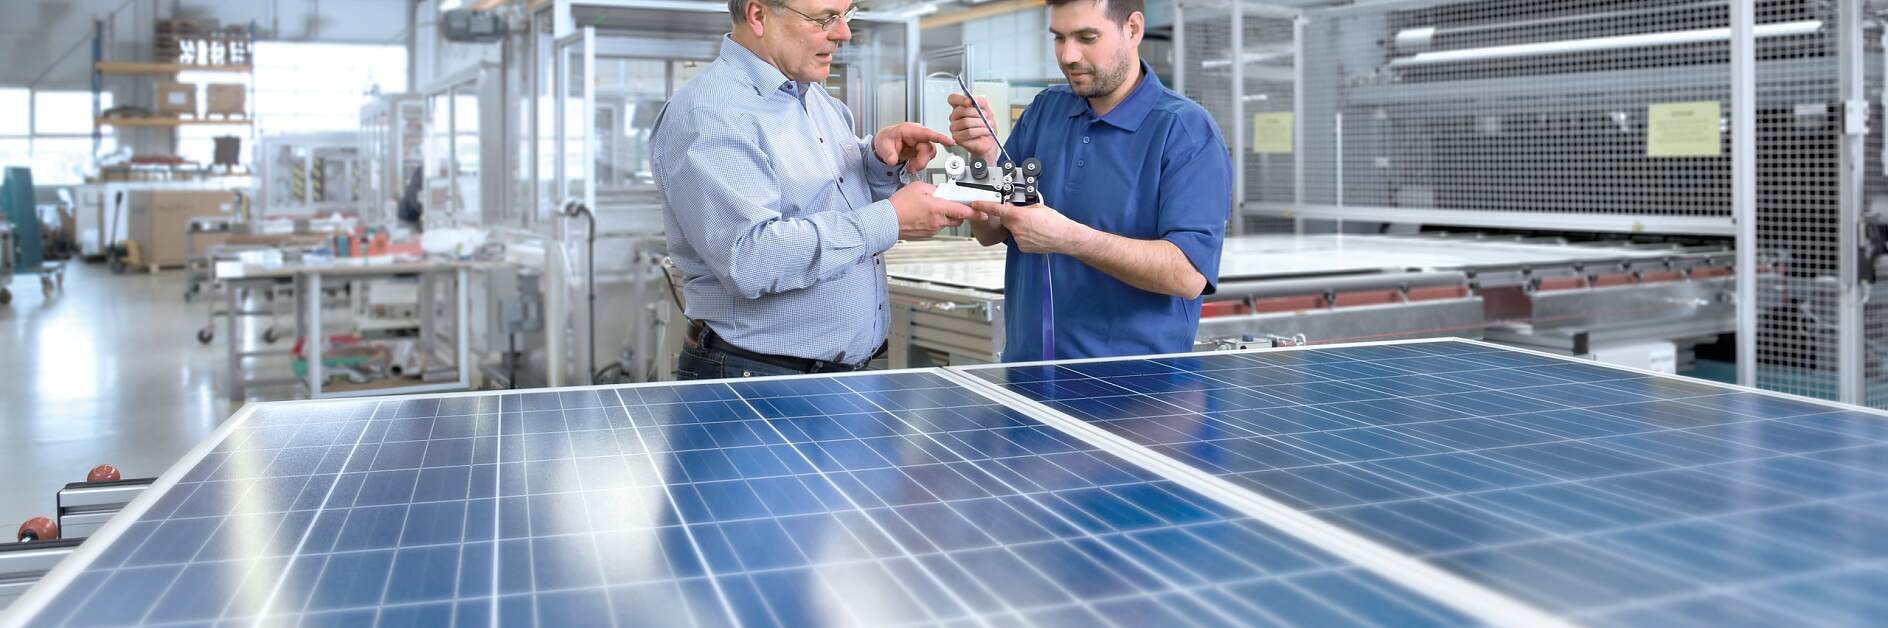 Solar-Industry-001